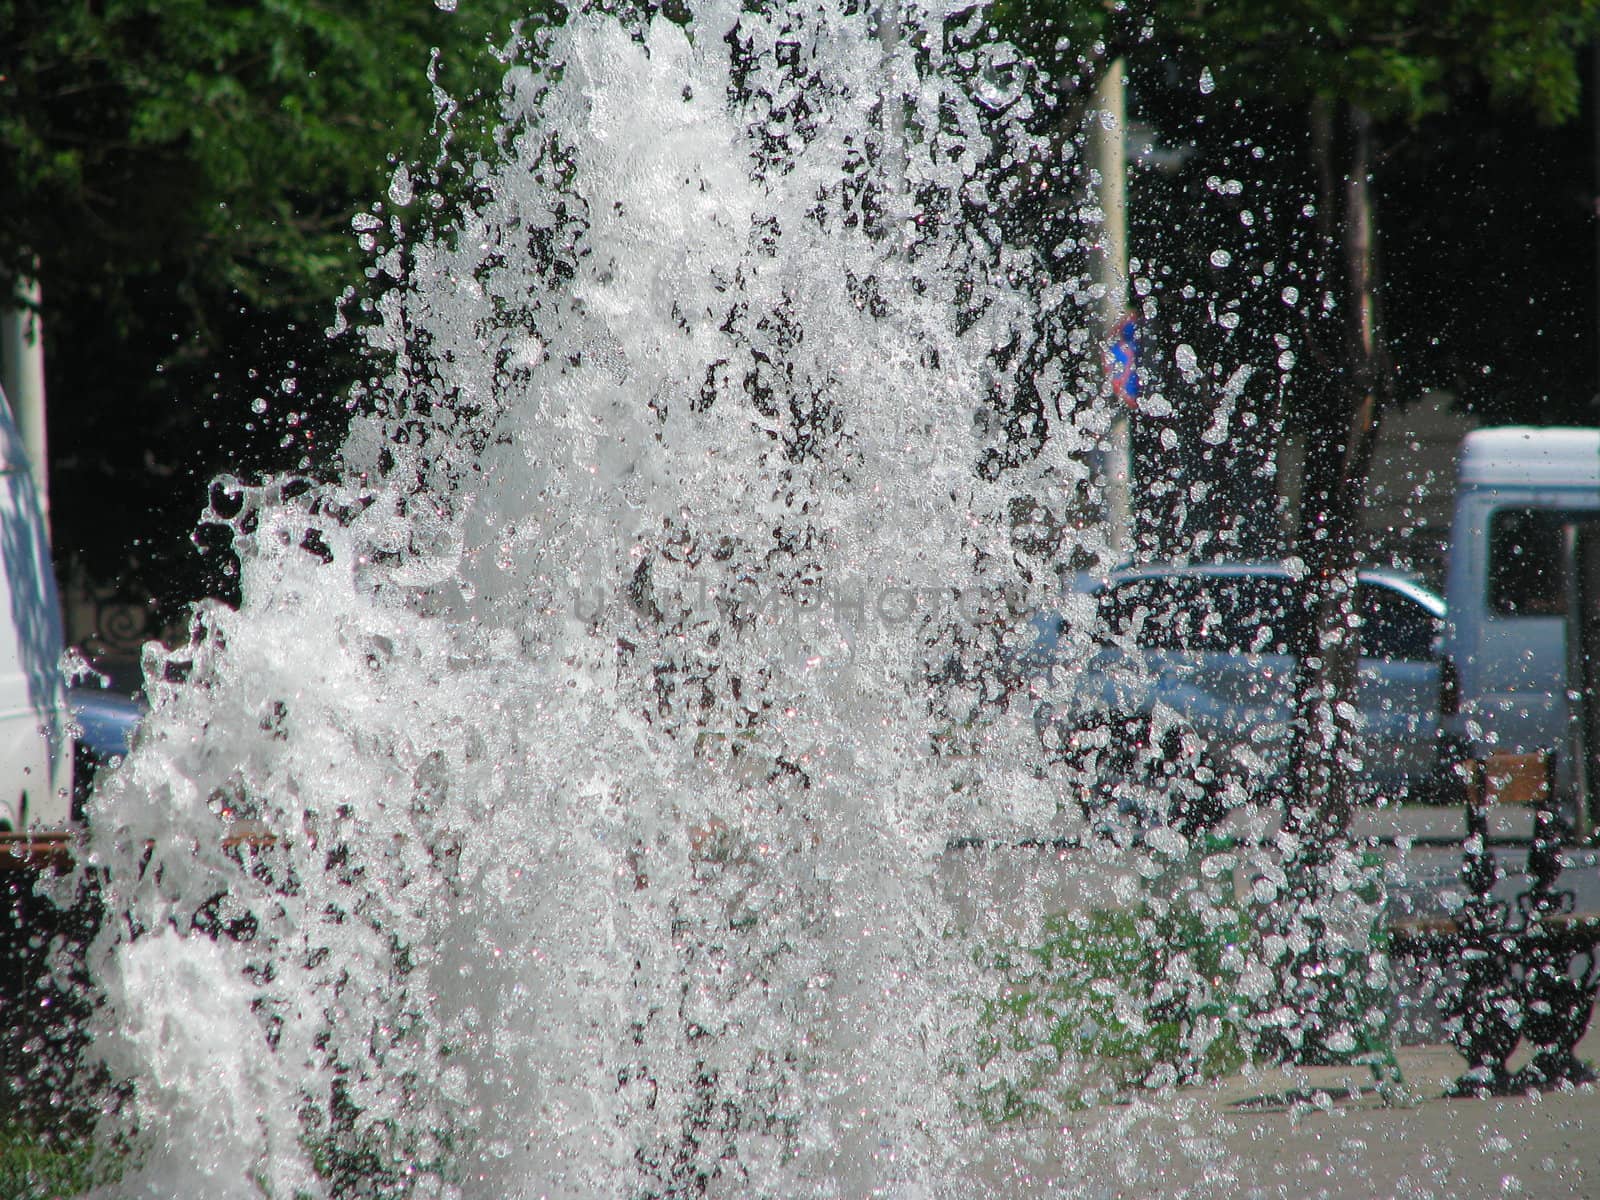 water fountain by velza1980